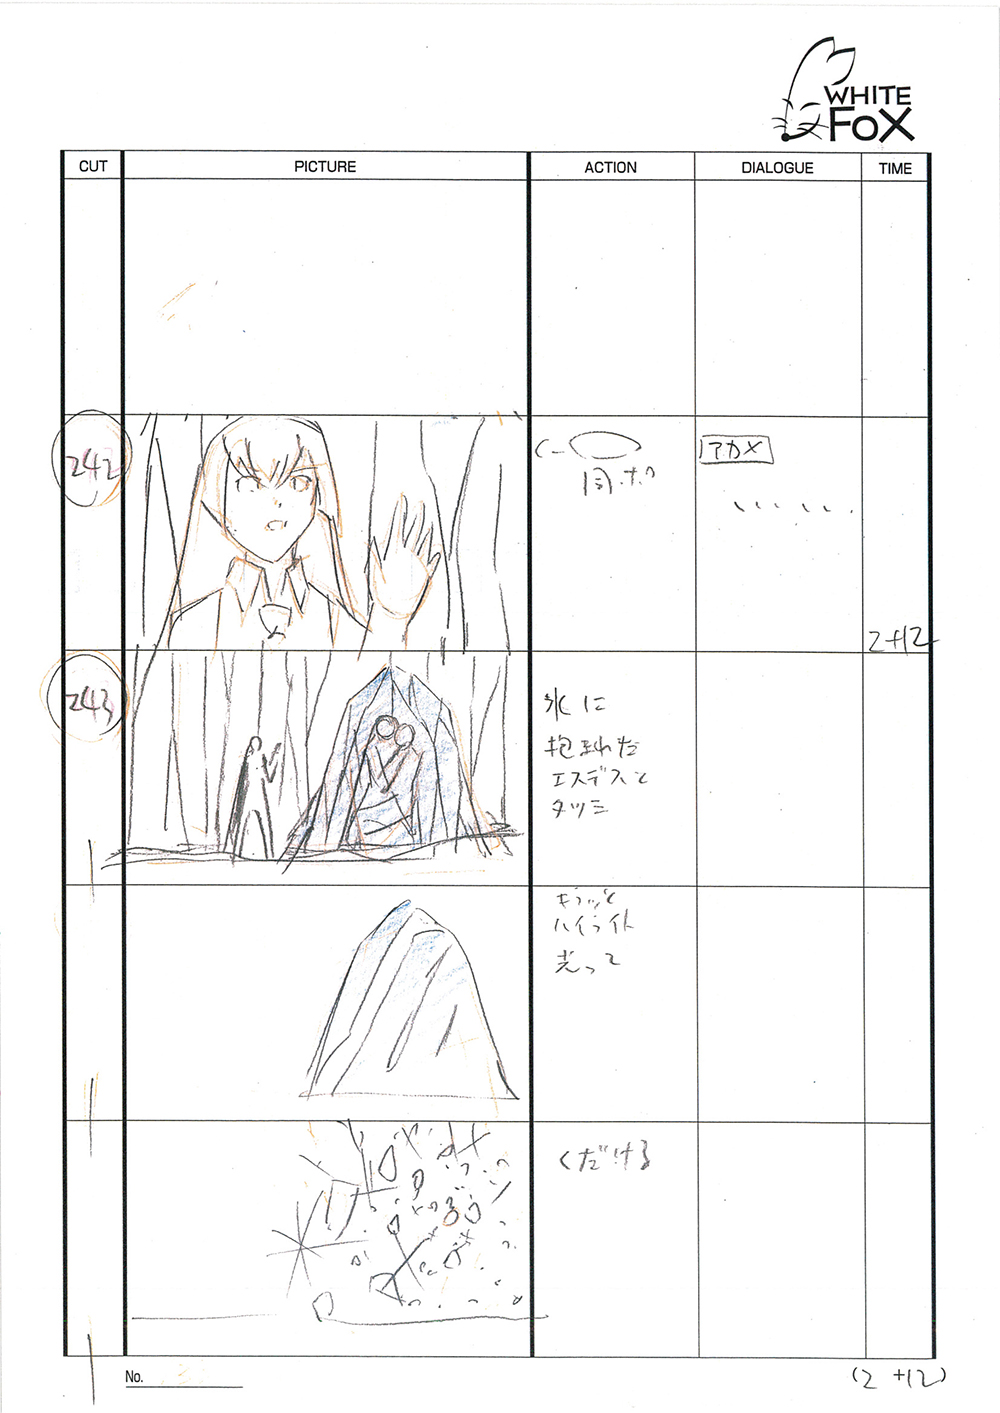 Akame ga Kill Episode 24 Storyboard Leak 138